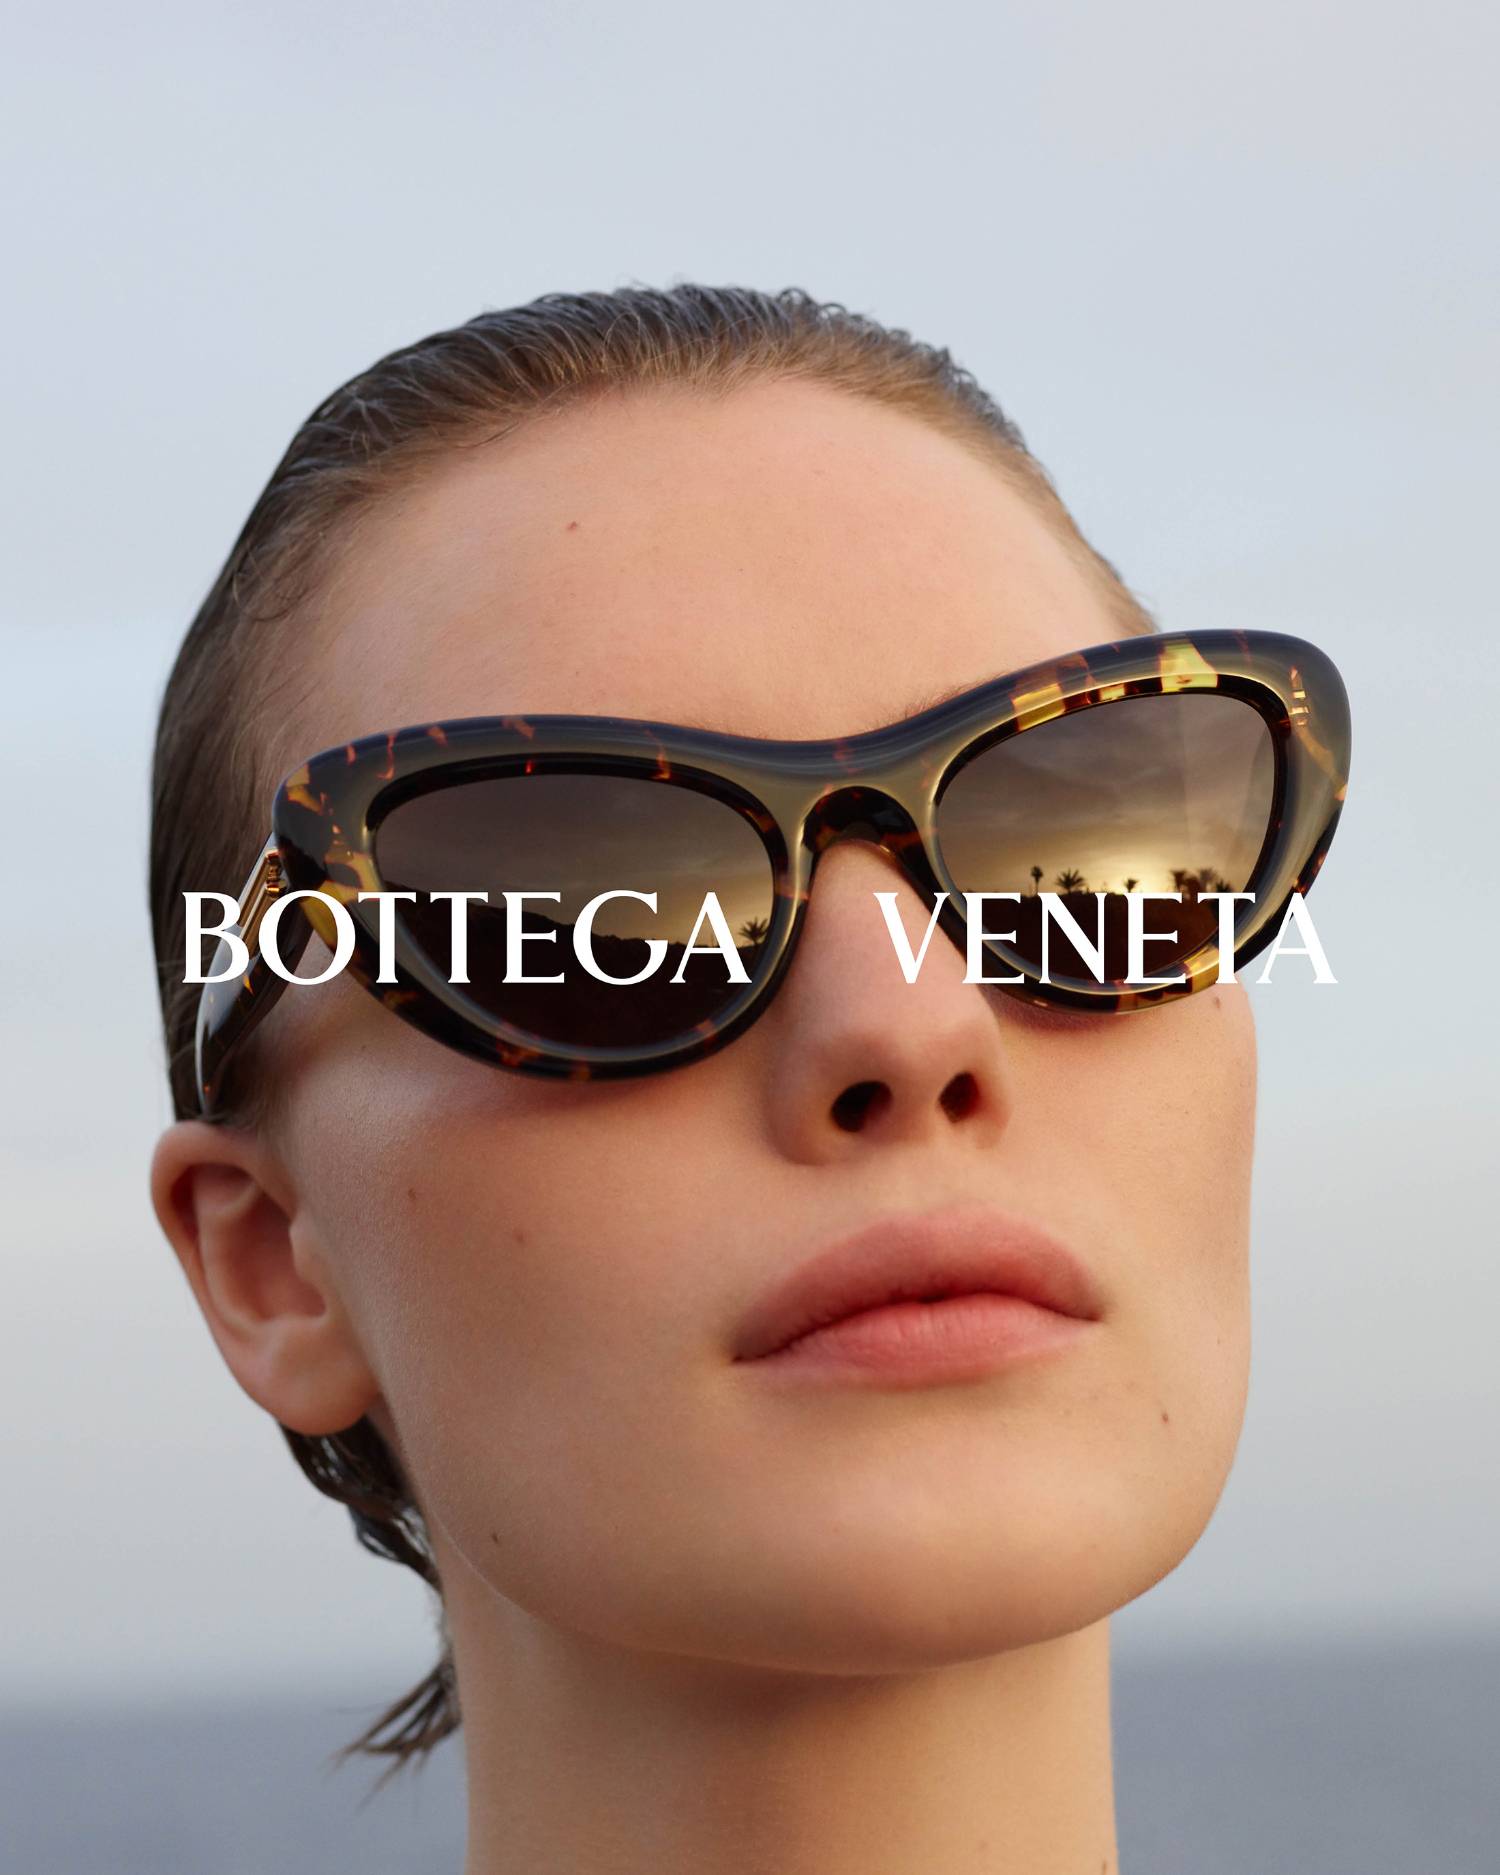 Luxury Sunglasses Fashion Campaign